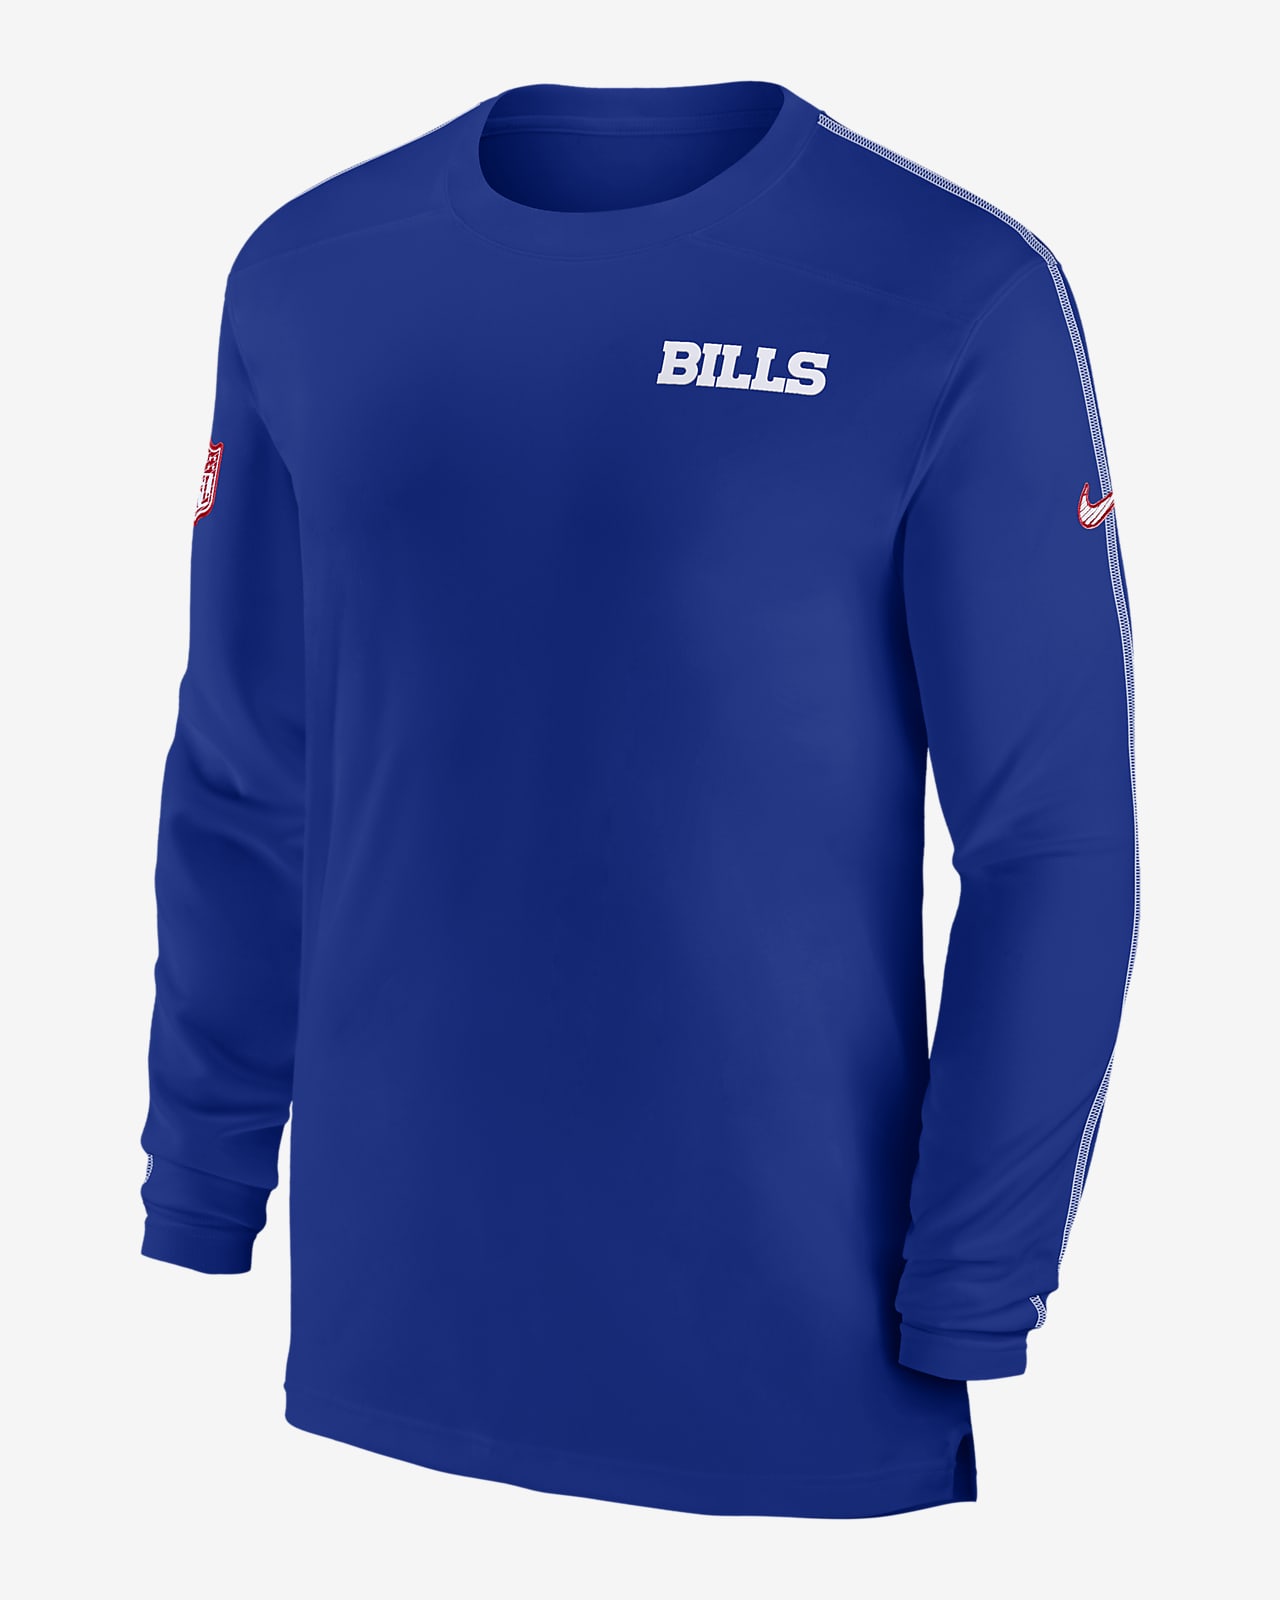 Playera de manga larga Nike Dri-FIT de la NFL para hombre Buffalo Bills Sideline Coach